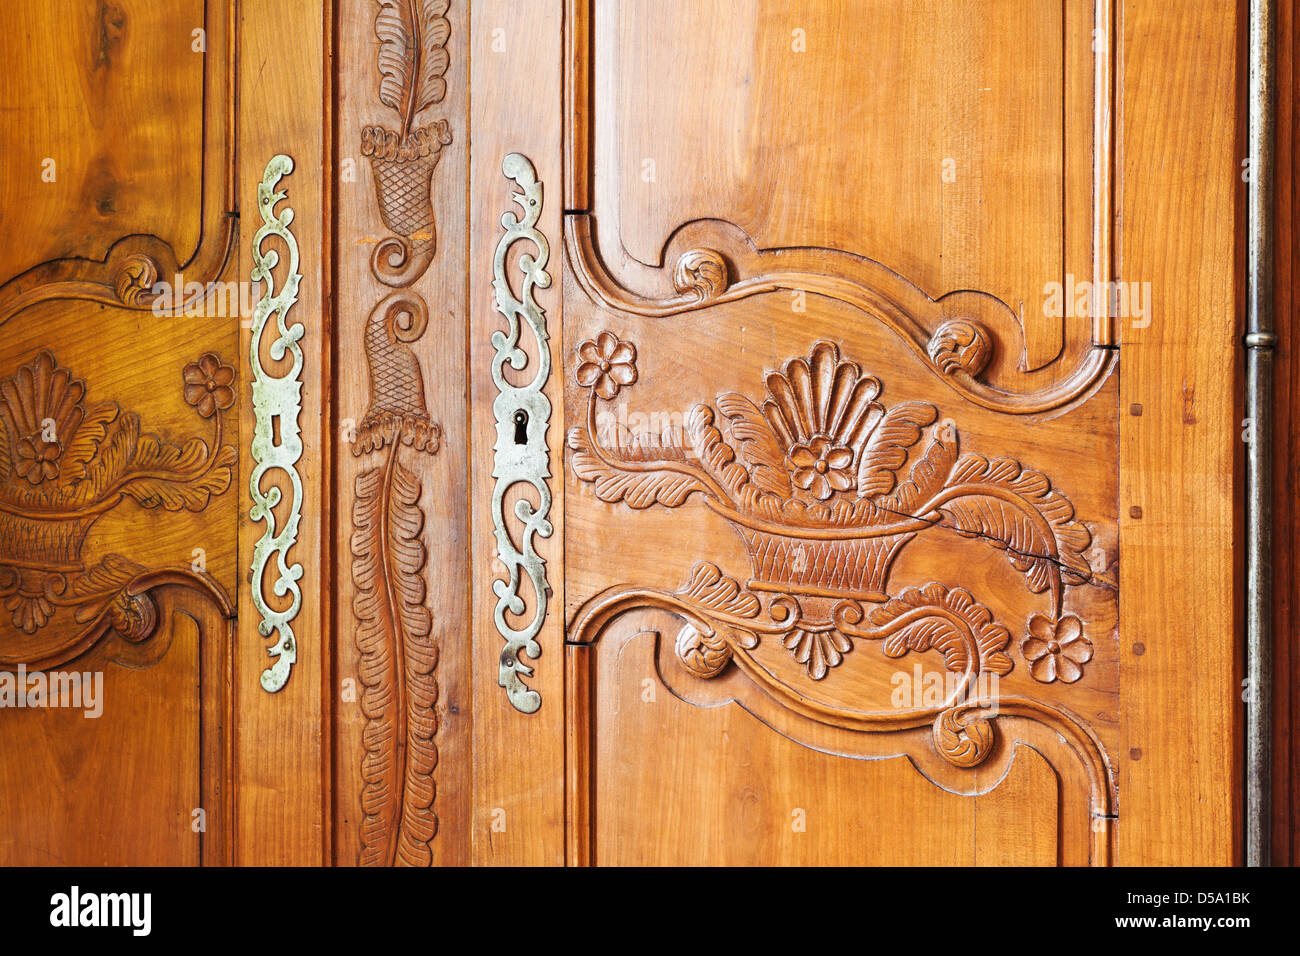 carved wooden door of old wardrobe Stock Photo